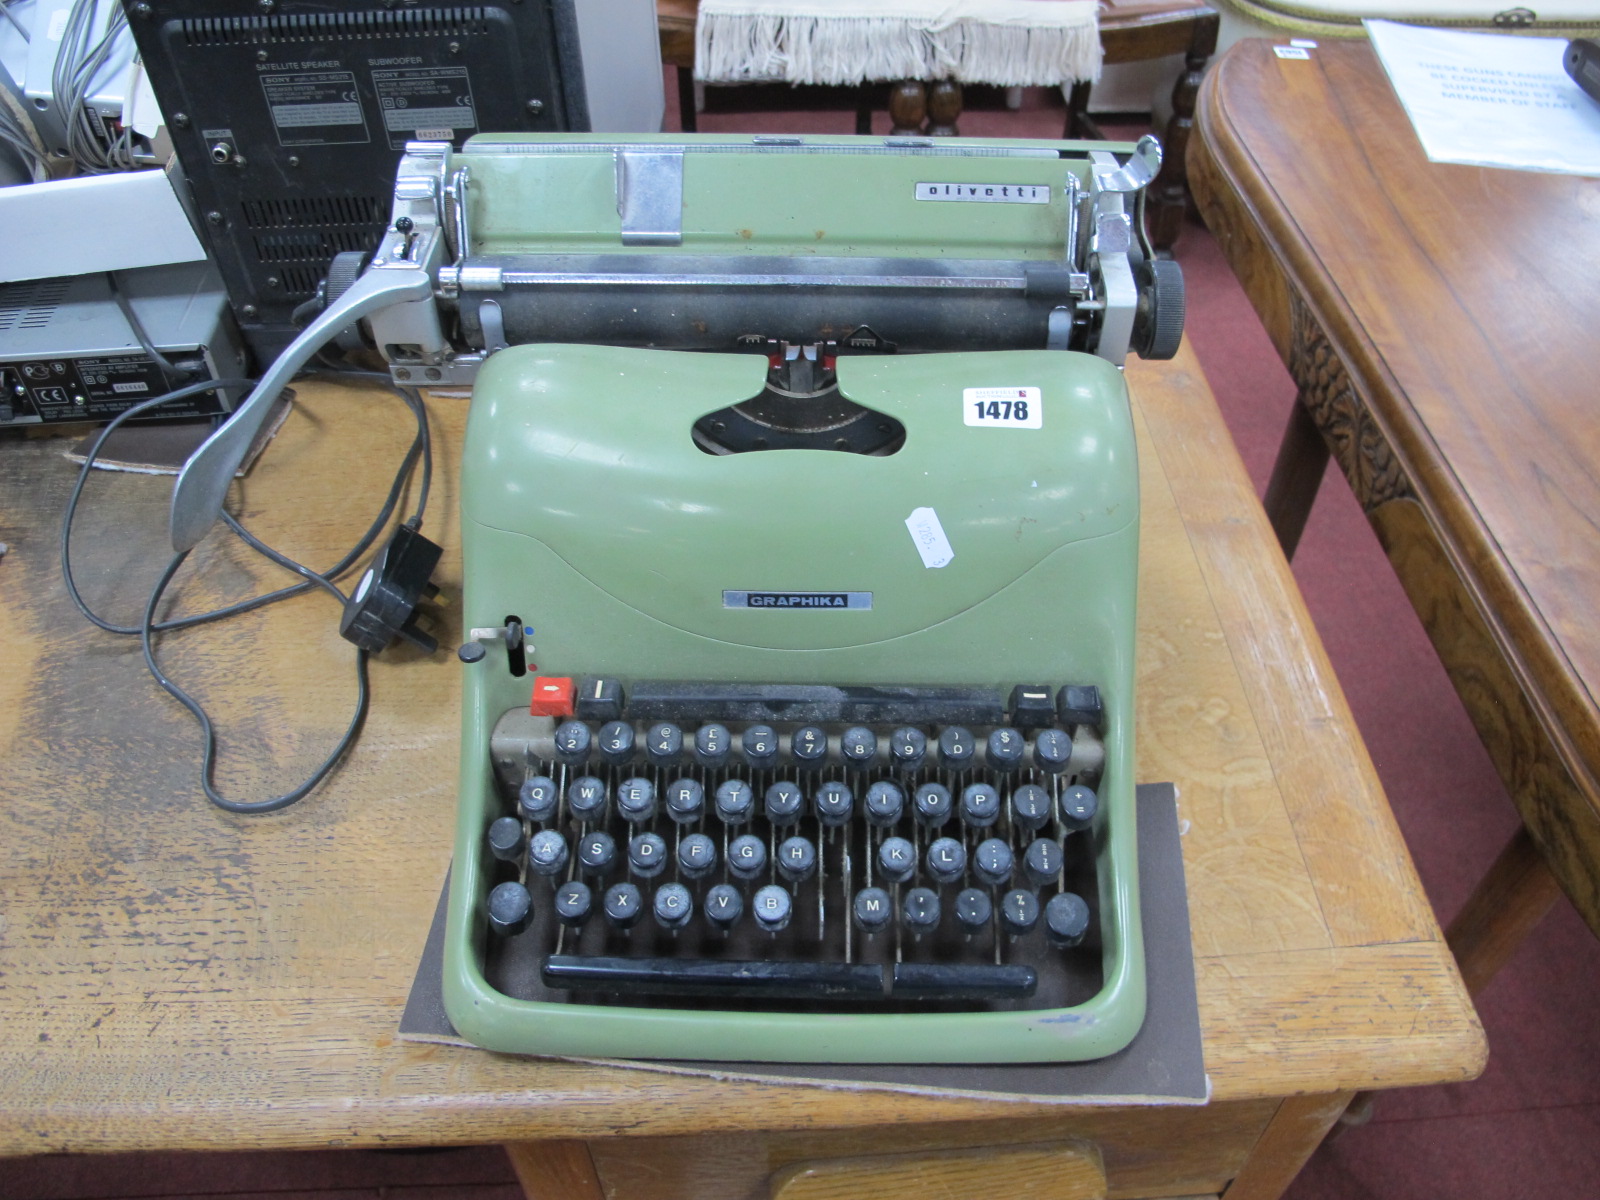 Olivetti 'Graphika' Green Typewriter.